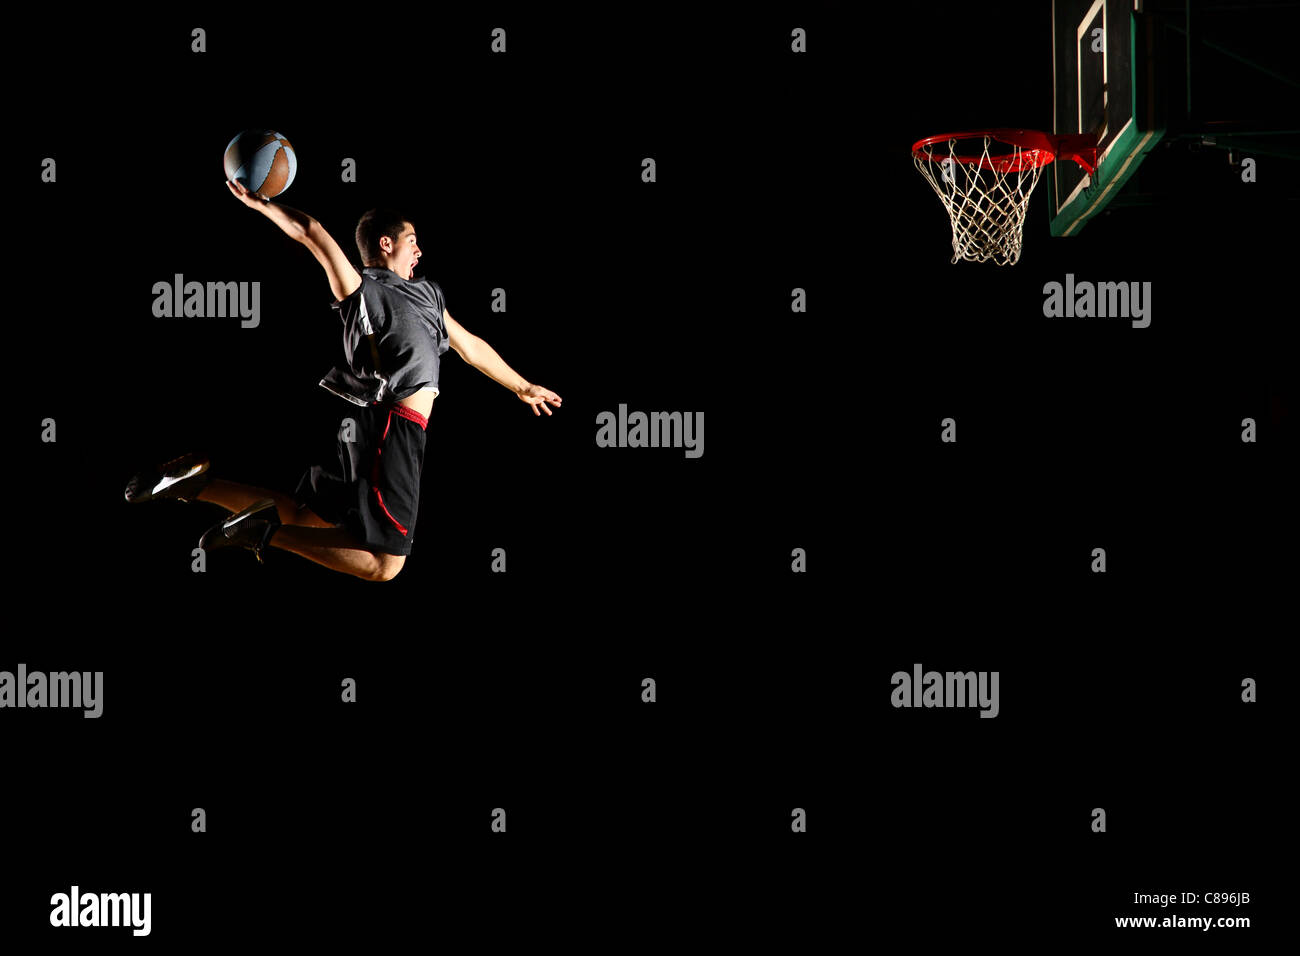 Basketball jump isolated on black background Stock Photo